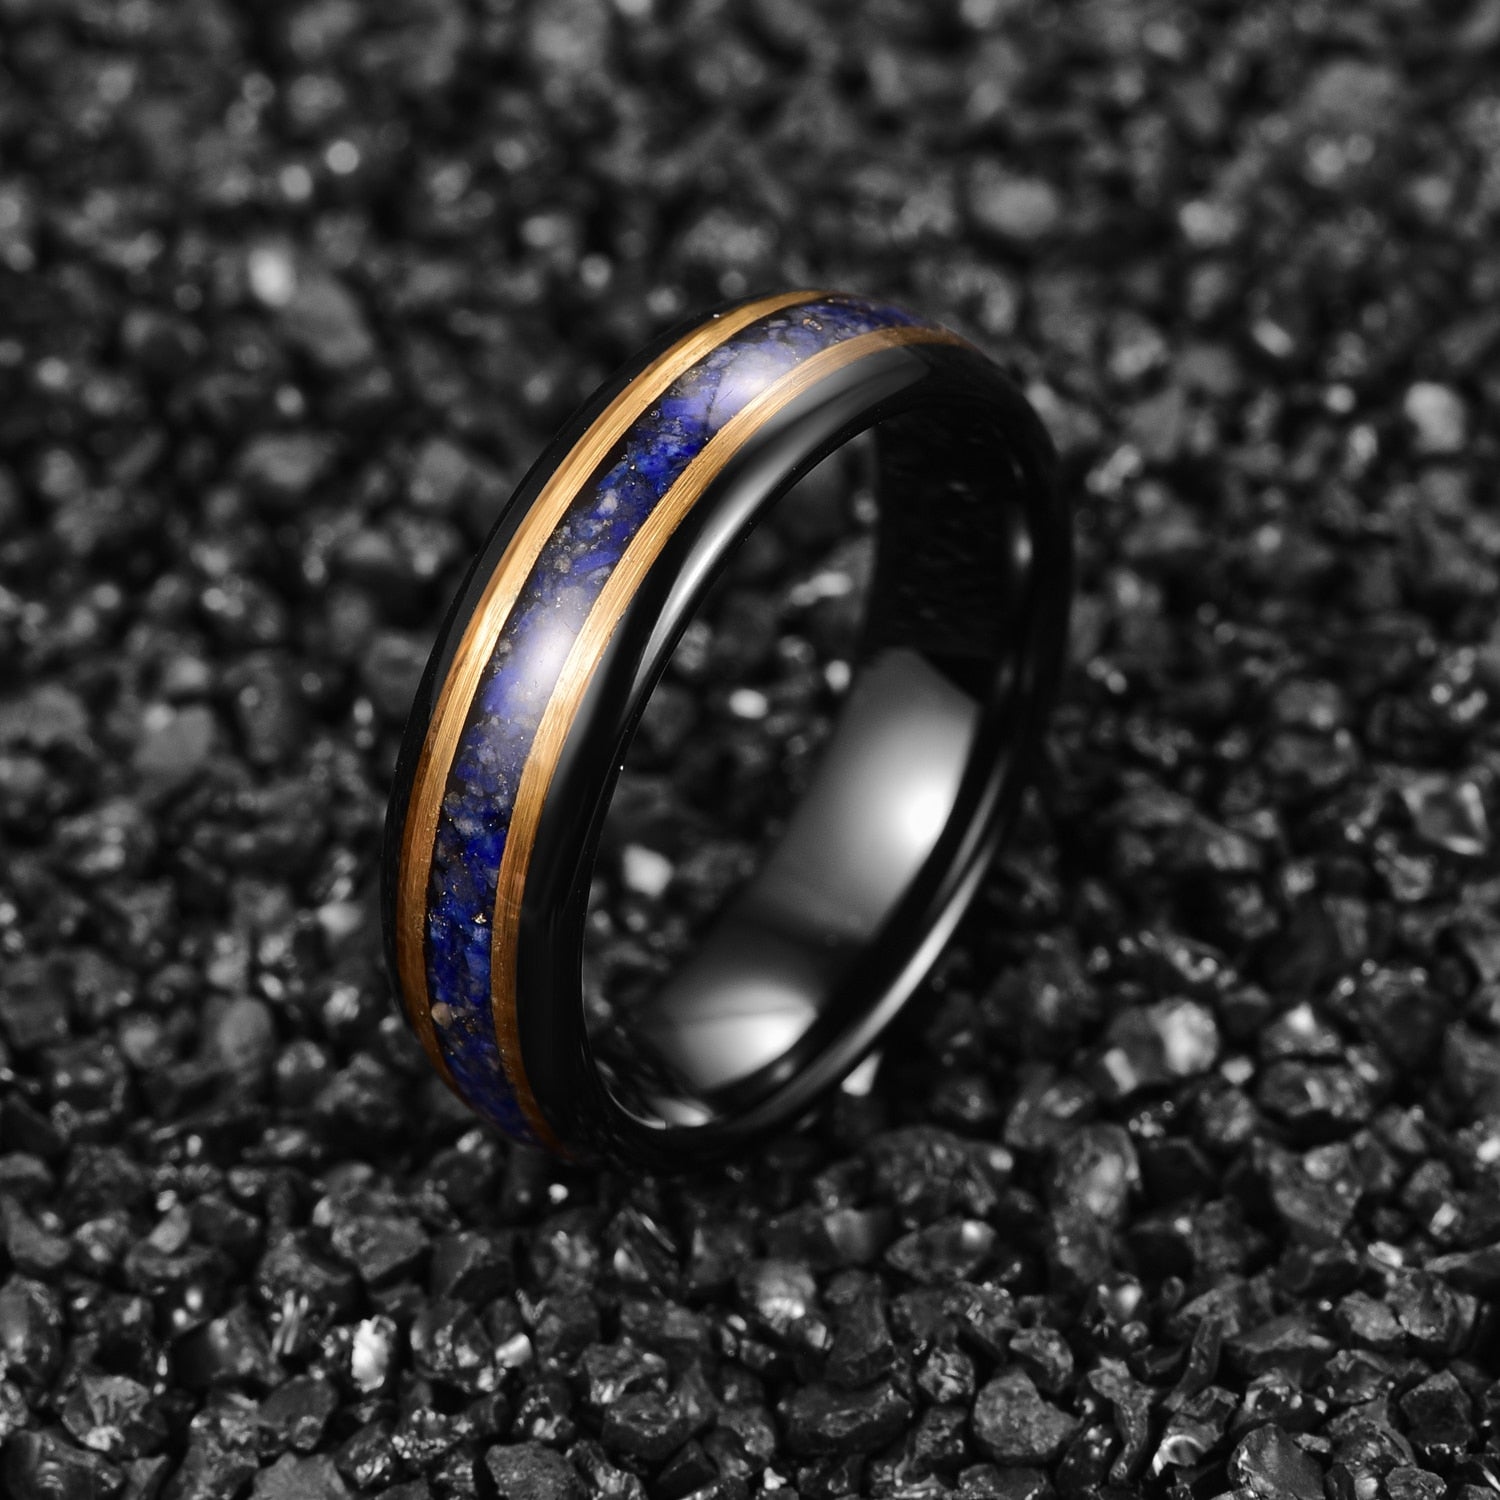 6mm Black Gold Color Inlaid Lapis Lazuli Inoxidizable Wedding Rings - Omamoristone お守り石